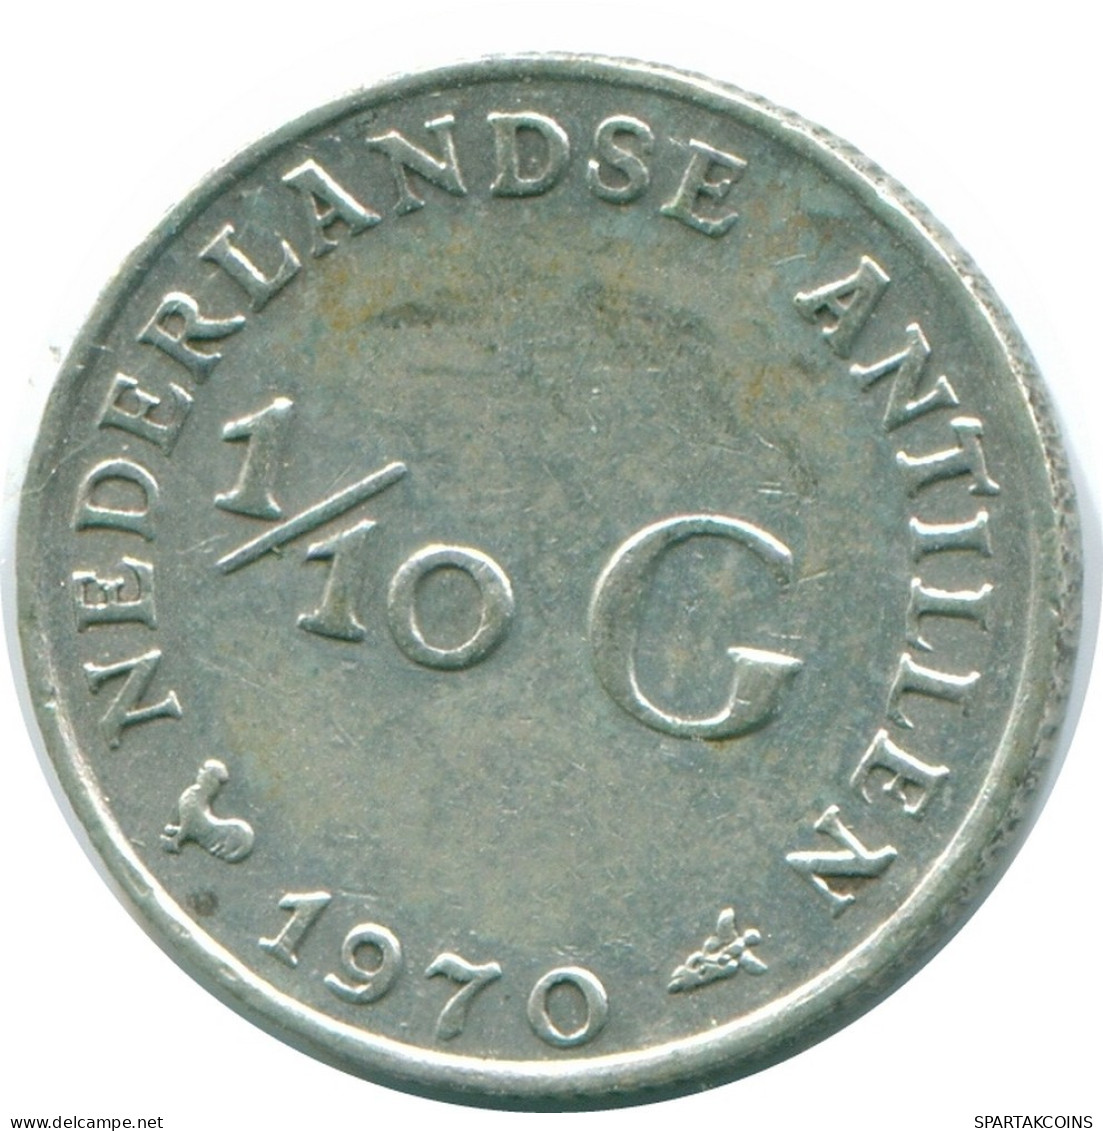 1/10 GULDEN 1970 NETHERLANDS ANTILLES SILVER Colonial Coin #NL12953.3.U.A - Antilles Néerlandaises